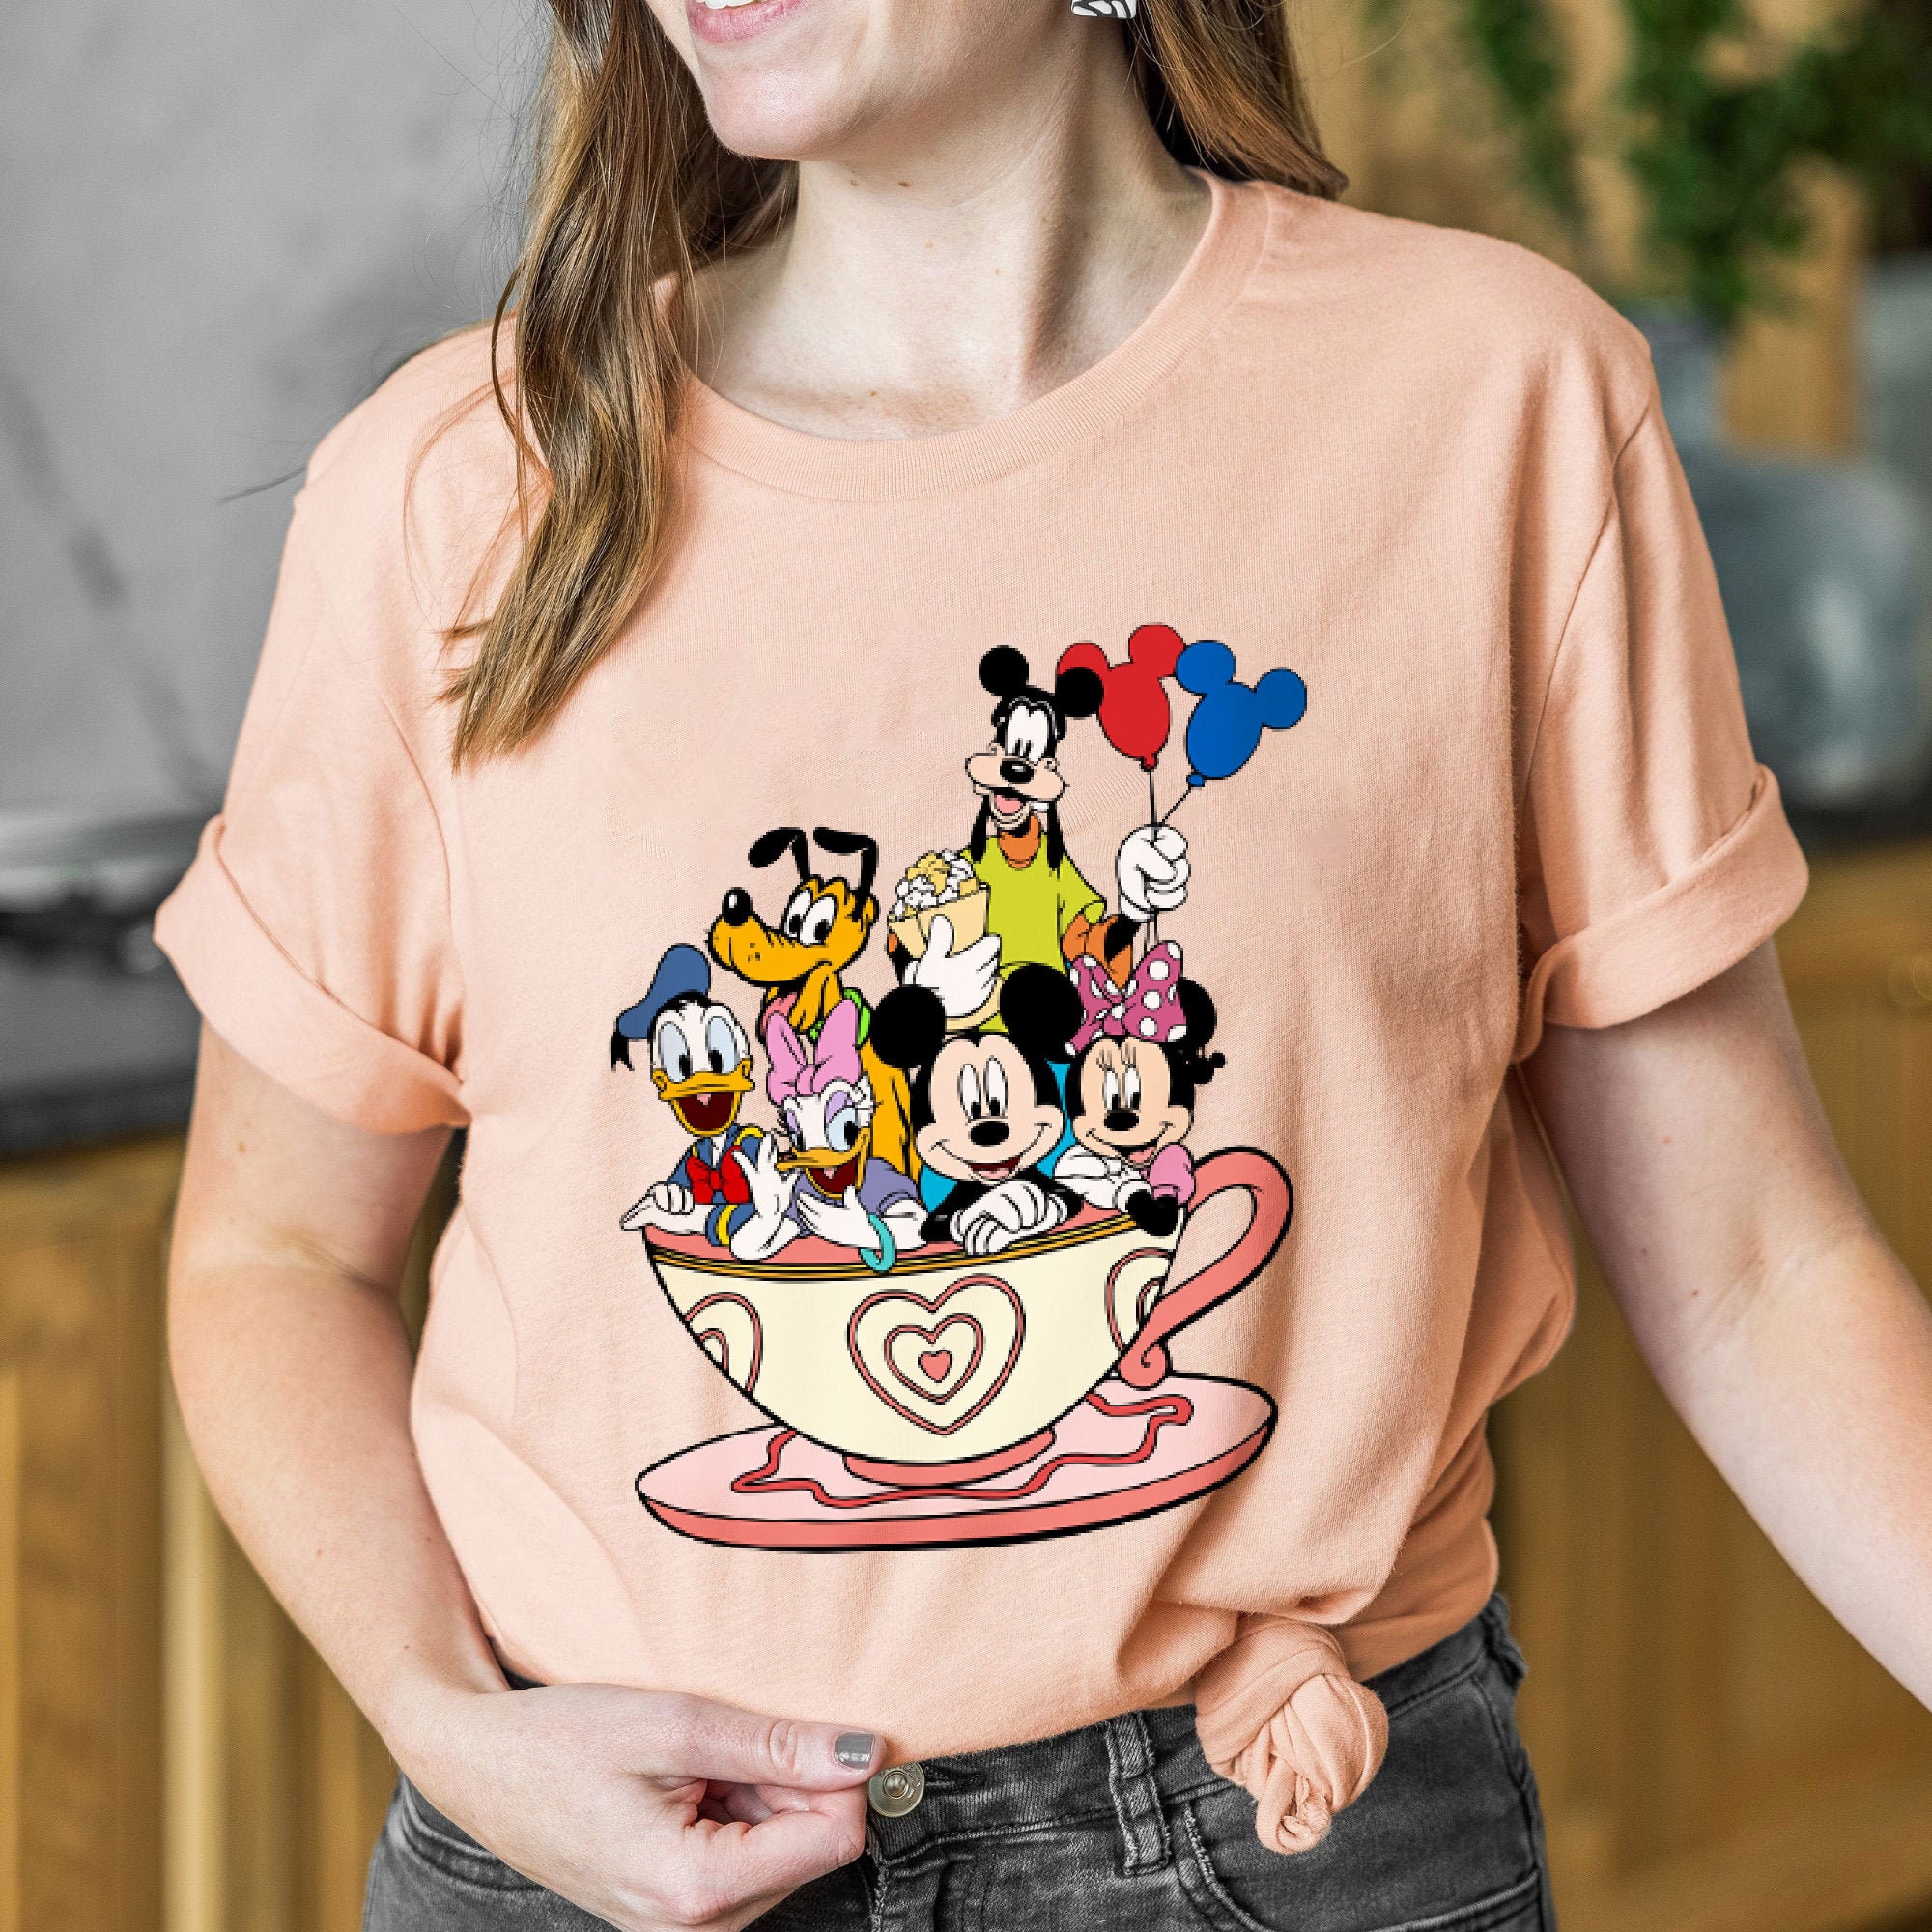 Mickey And Friends Shirt, Disney Family shirt, Disneyland shirt, Disneyworld shirt, Disney Balloon Shirt, Disney Vacation Shirt